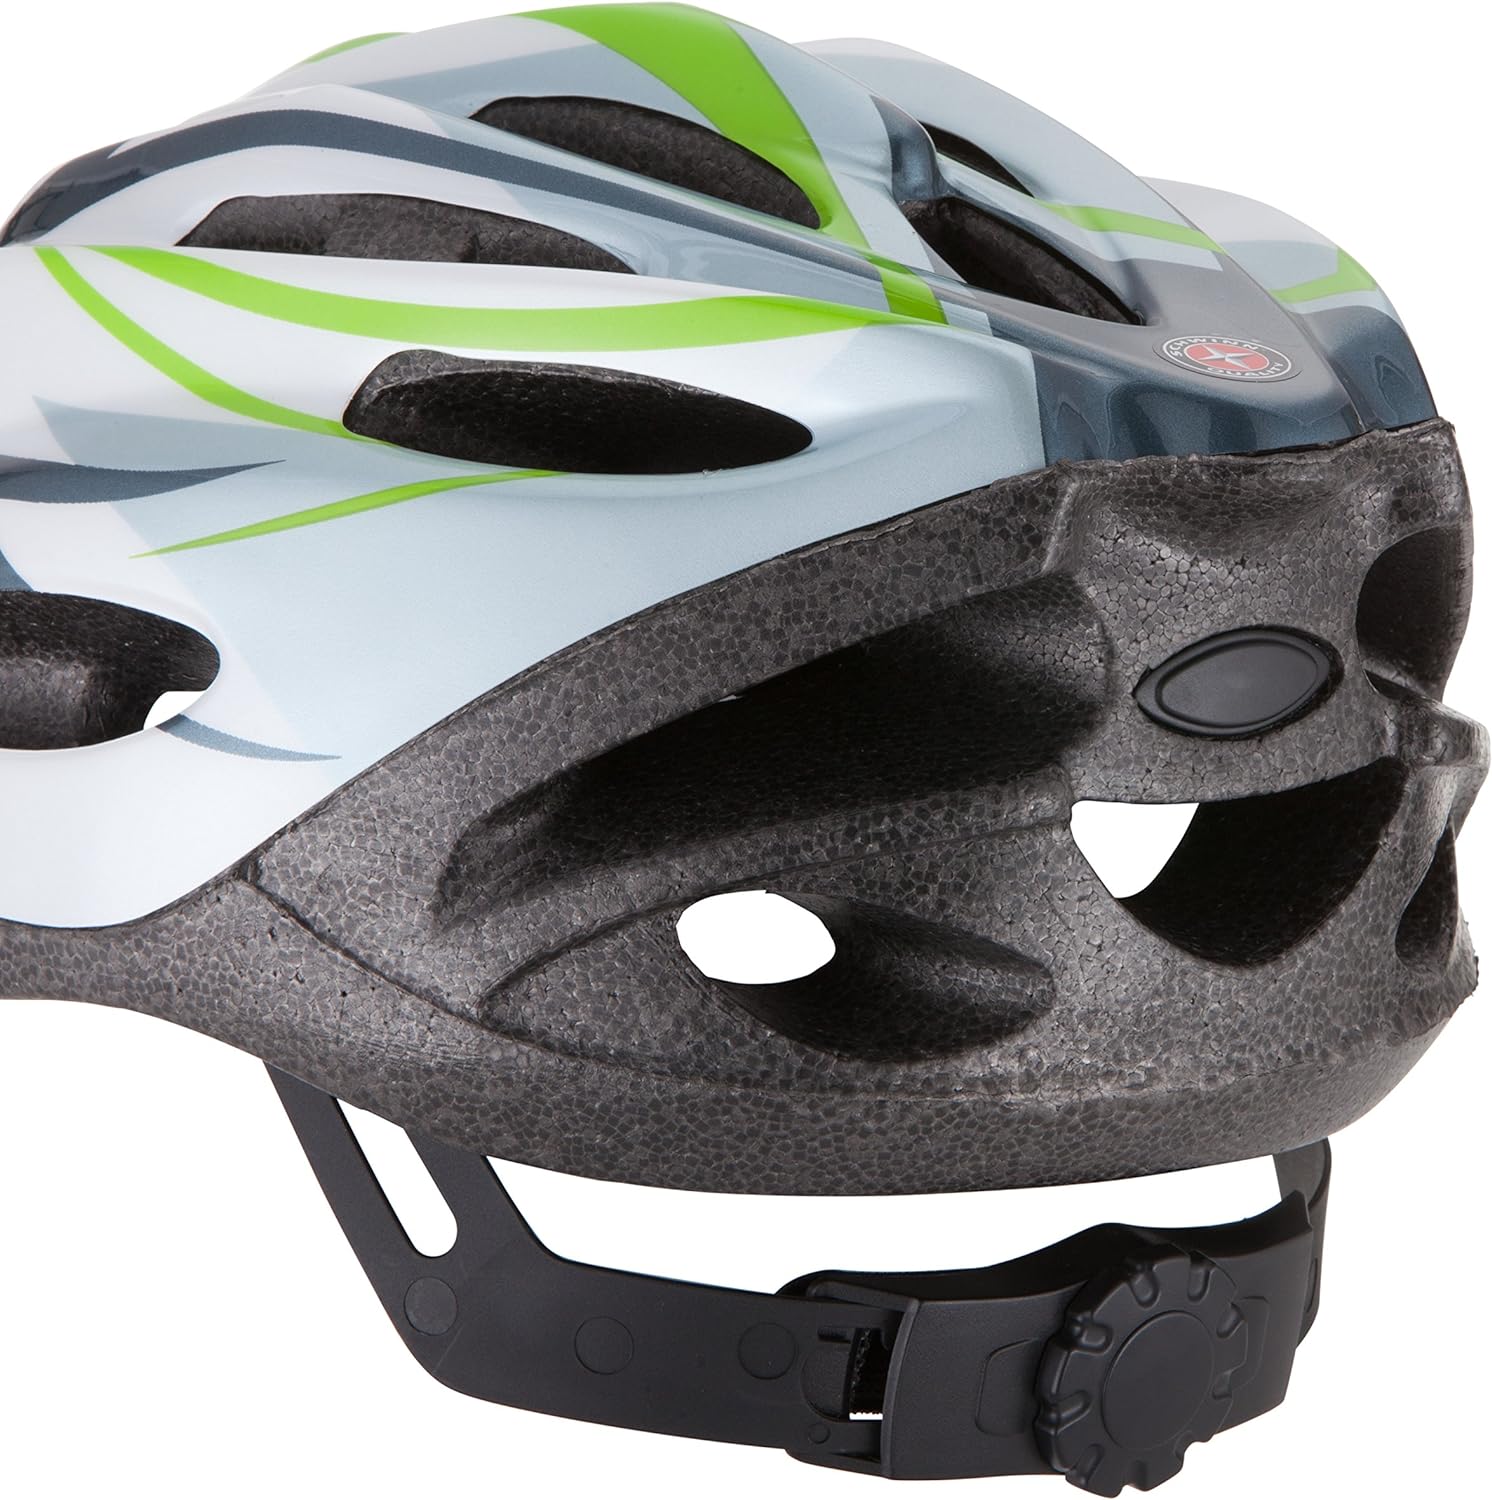 Schwinn Traveler Bike Helmet, Adult and Youth Sizes White/Green